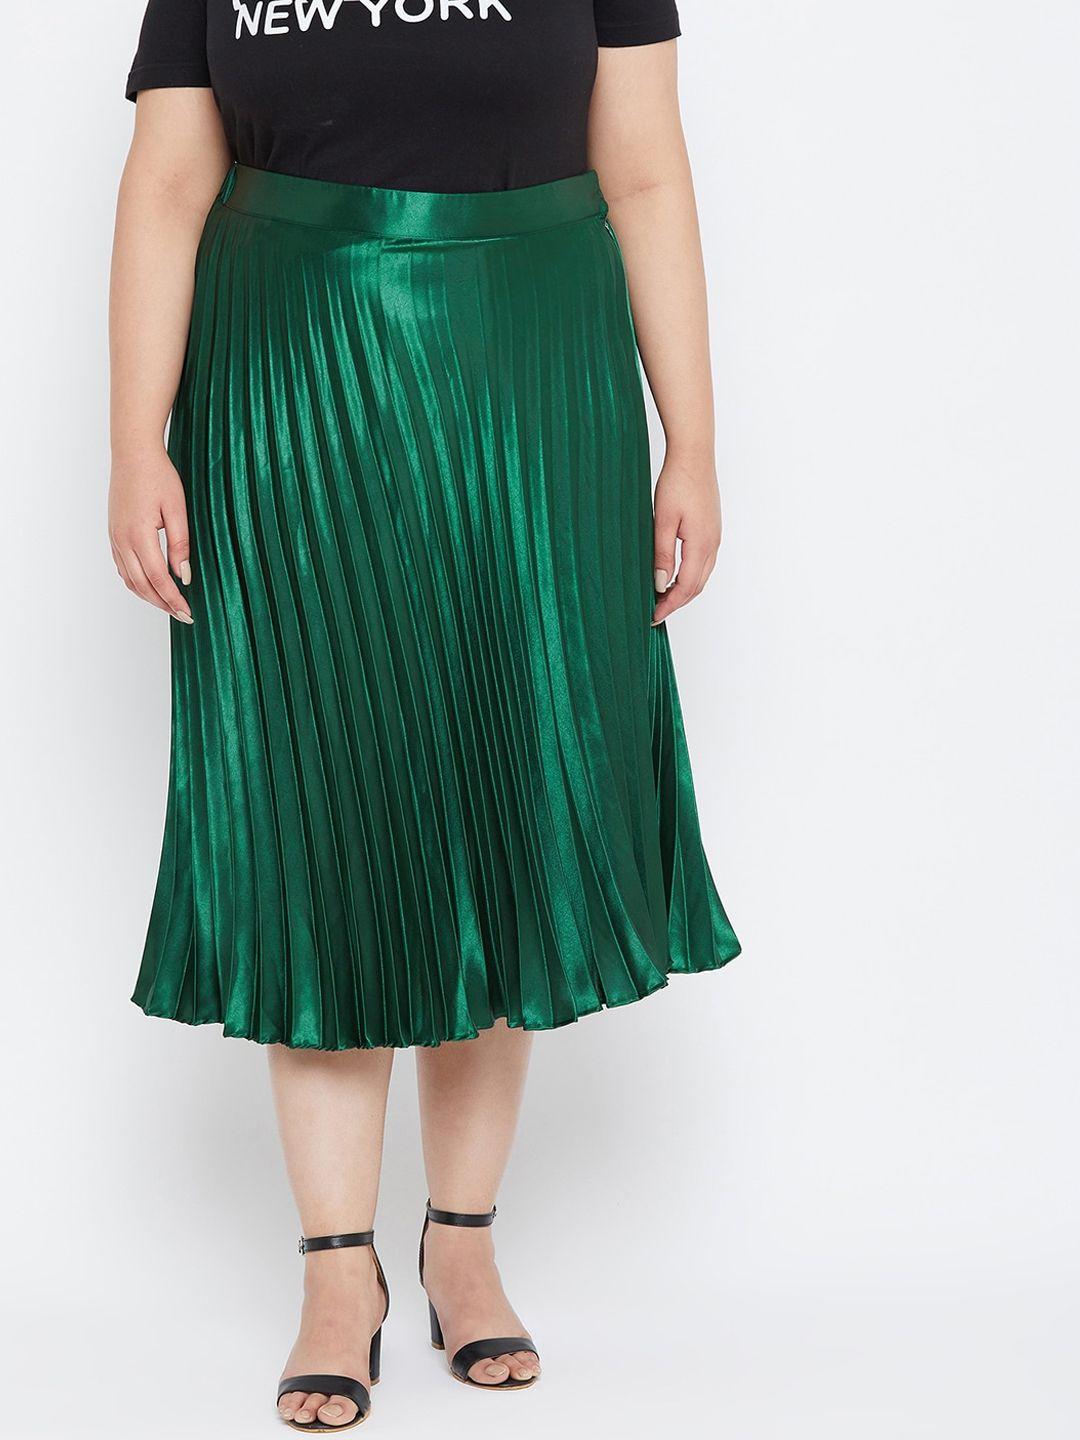 uptownie lite plus size green solid accordian pleated satin flared midi skirt